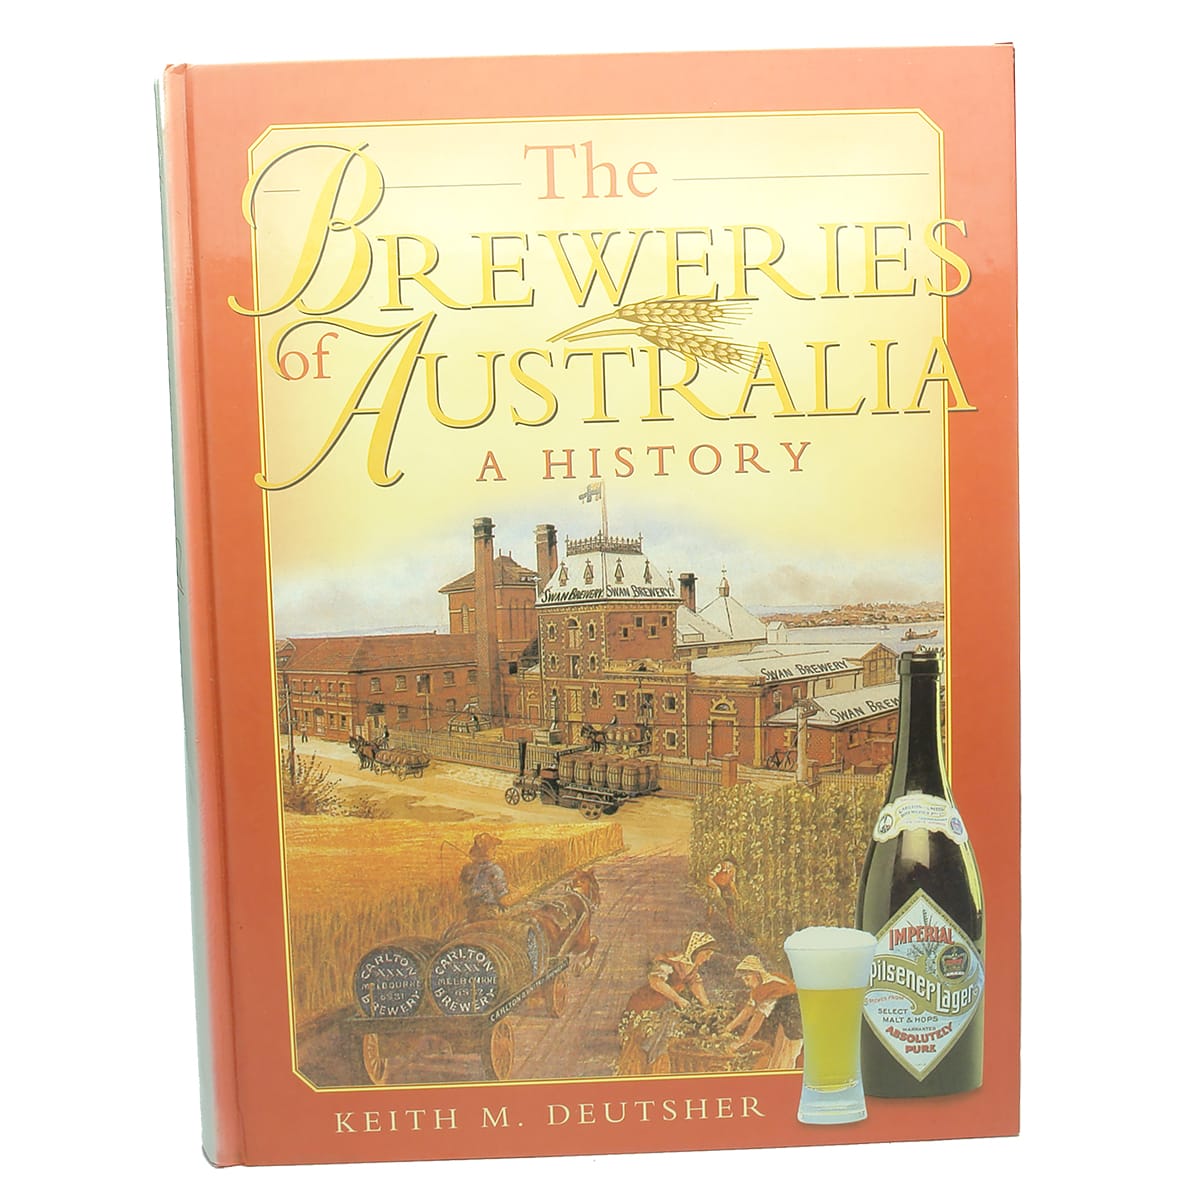 Book. The Breweries of Australia, A History, Keith M. Deutscher, 1999.